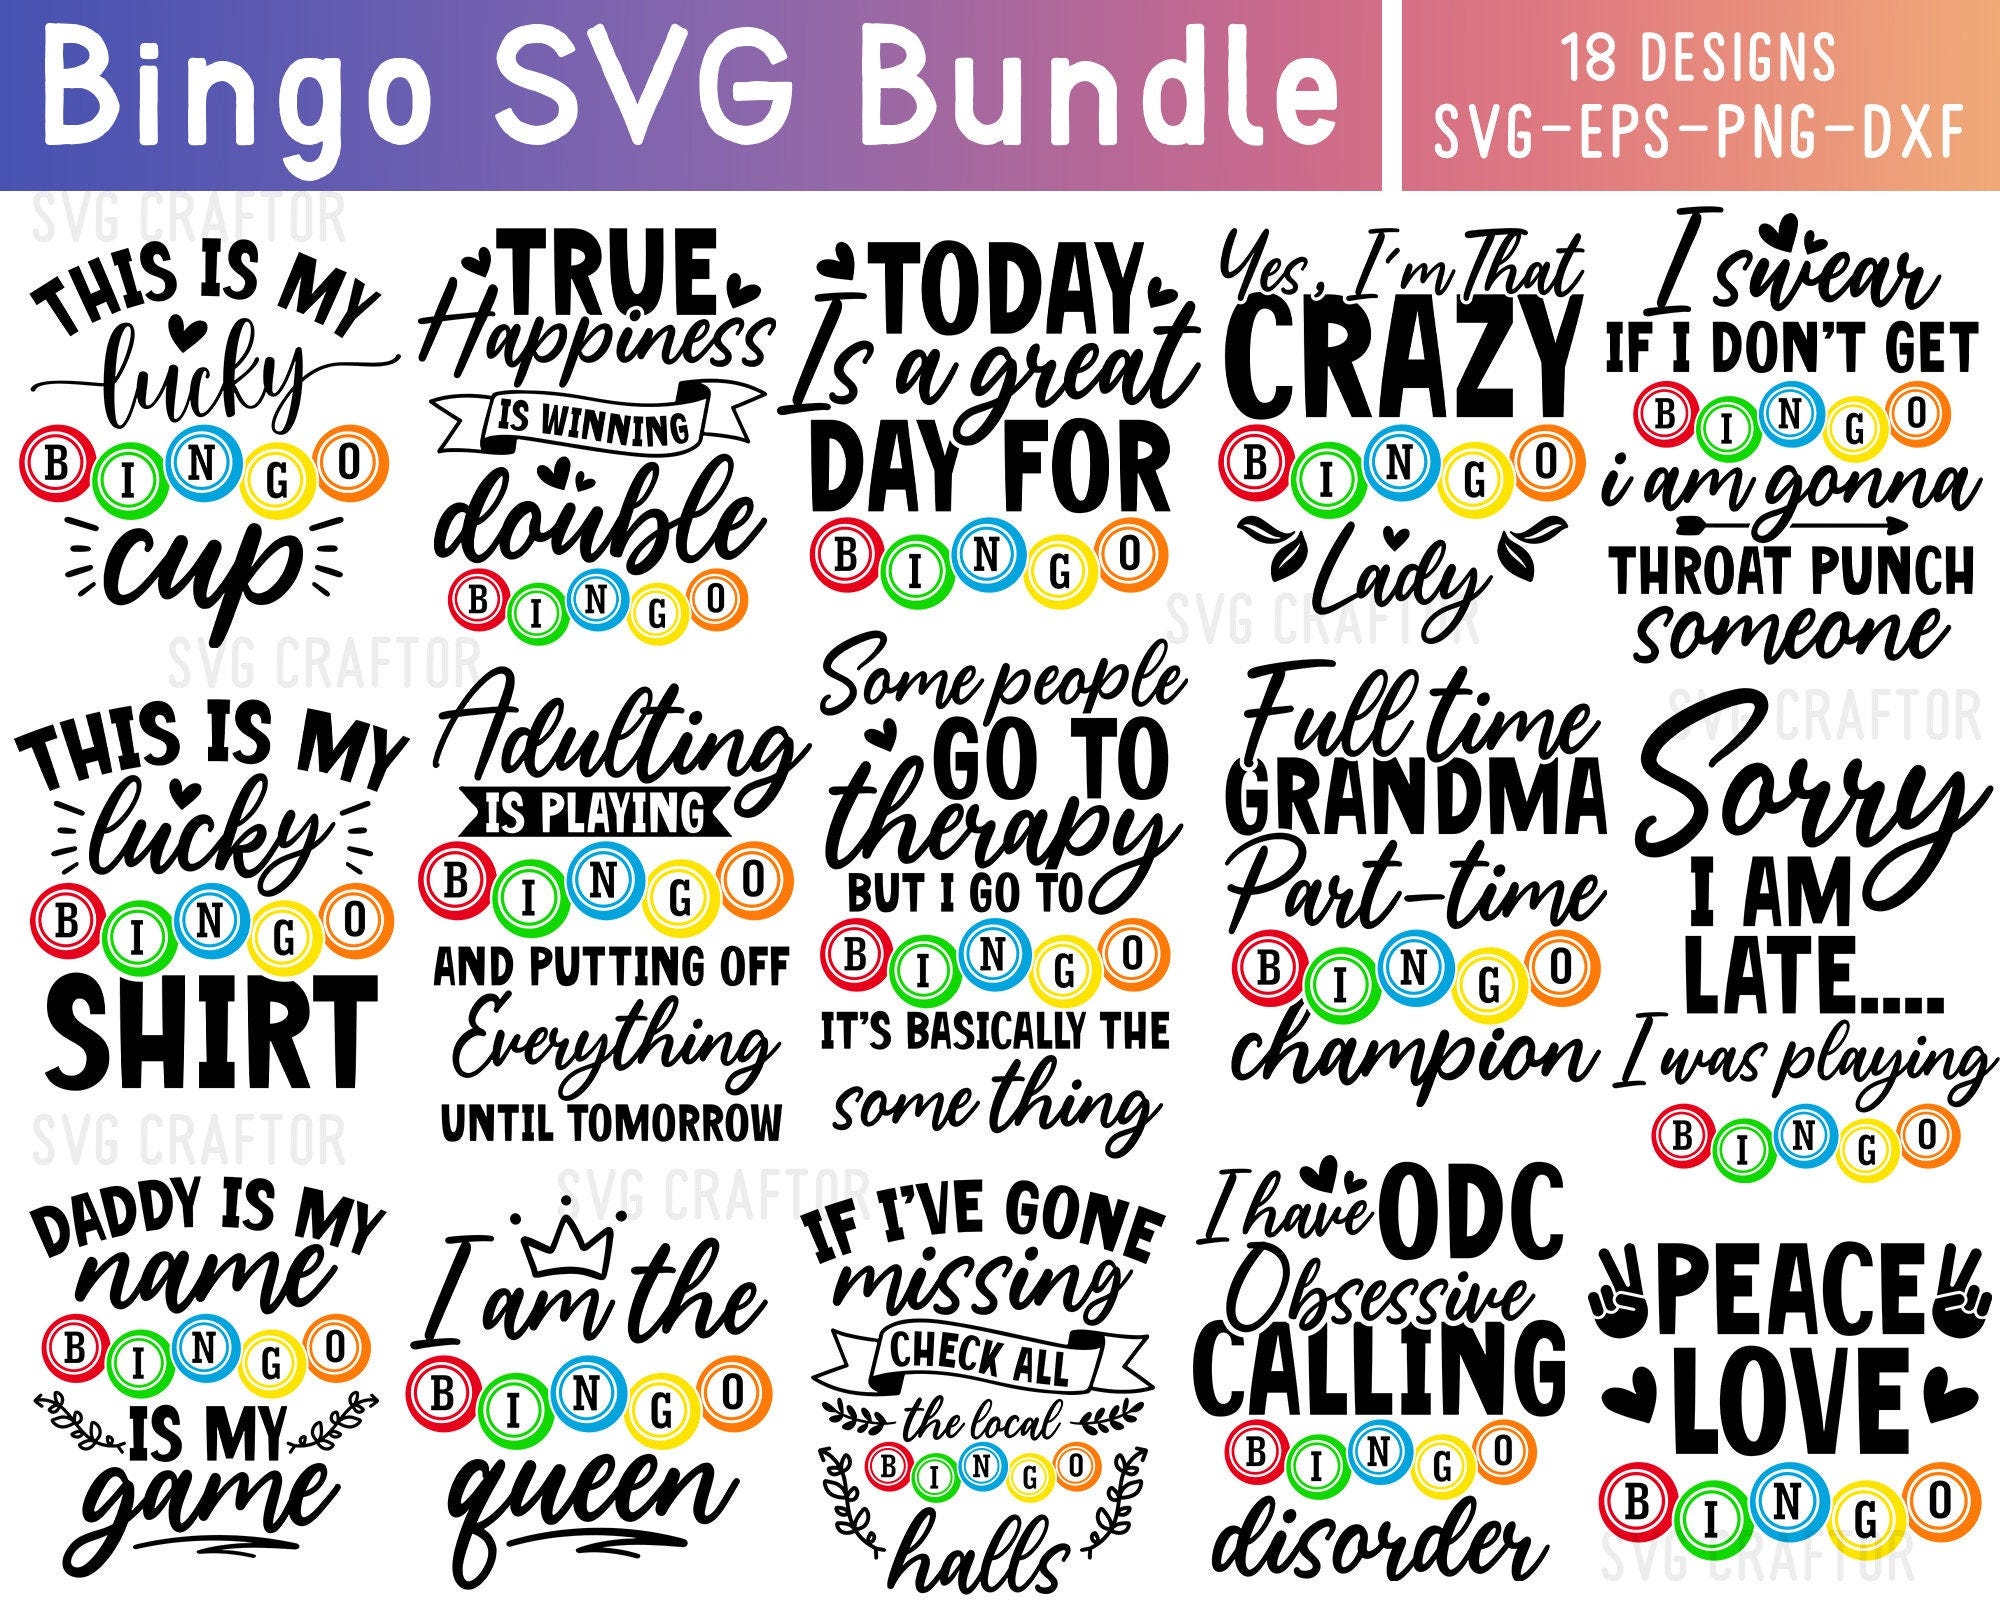 Bingo Svg Bundle, Bingo Design Bundle, Bingo Quotes SVG, Bingo Lady svg, Bingo Games svg, Bingo Queen svg, Bingo Cup svg, Bingo Shirt, Bingo